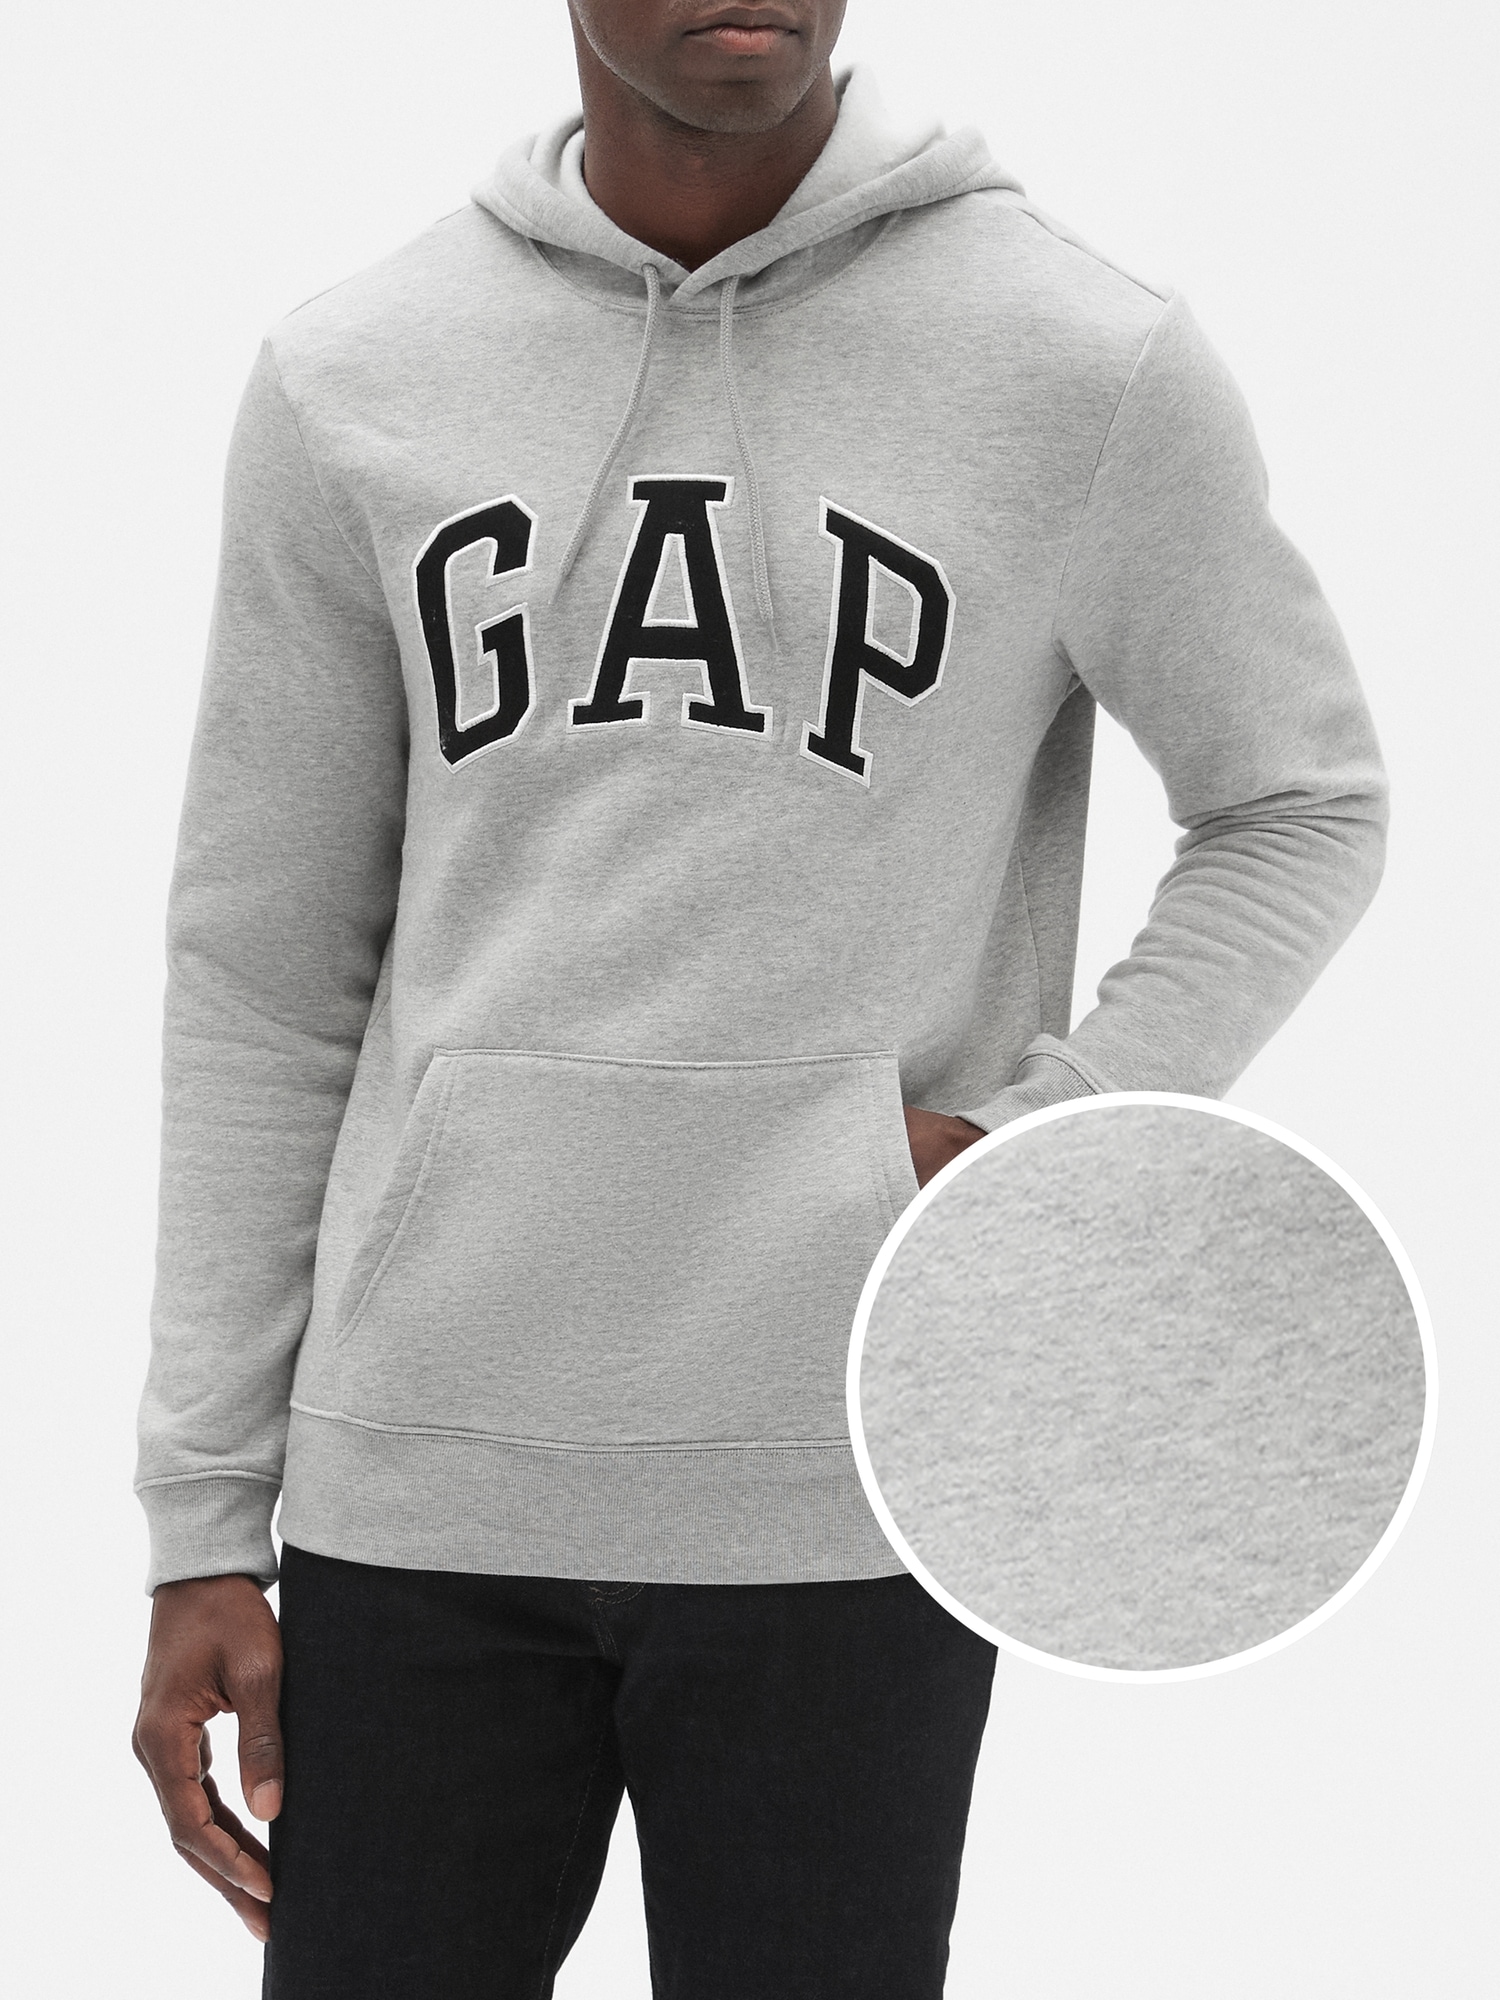 gap factory baby arch logo hoodie